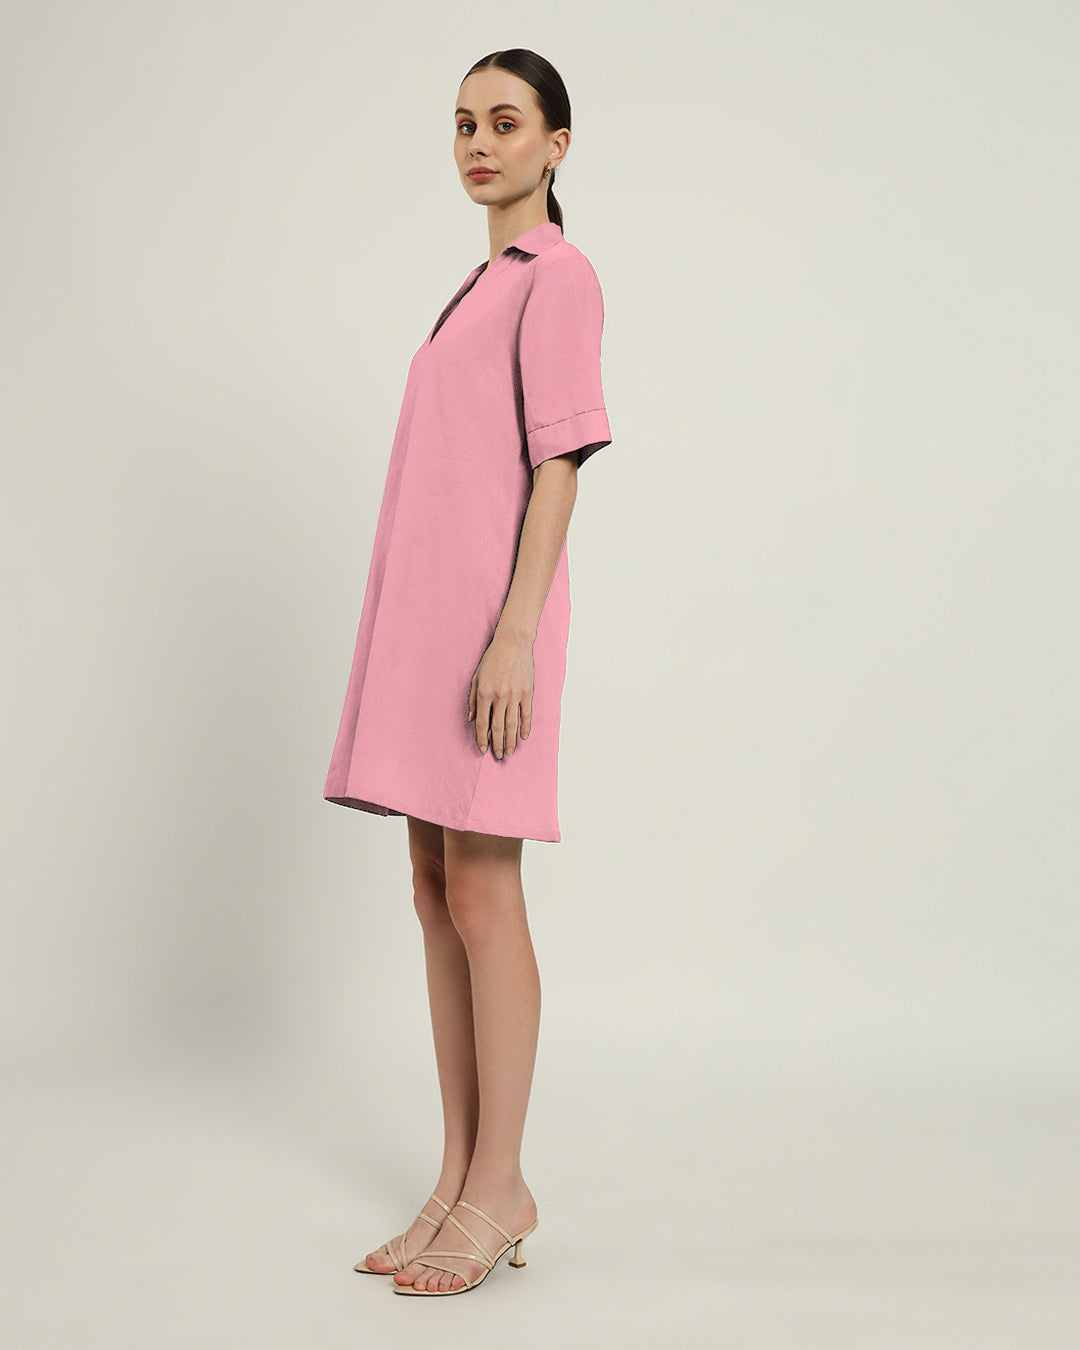 The Ermont Fondant Pink Dress